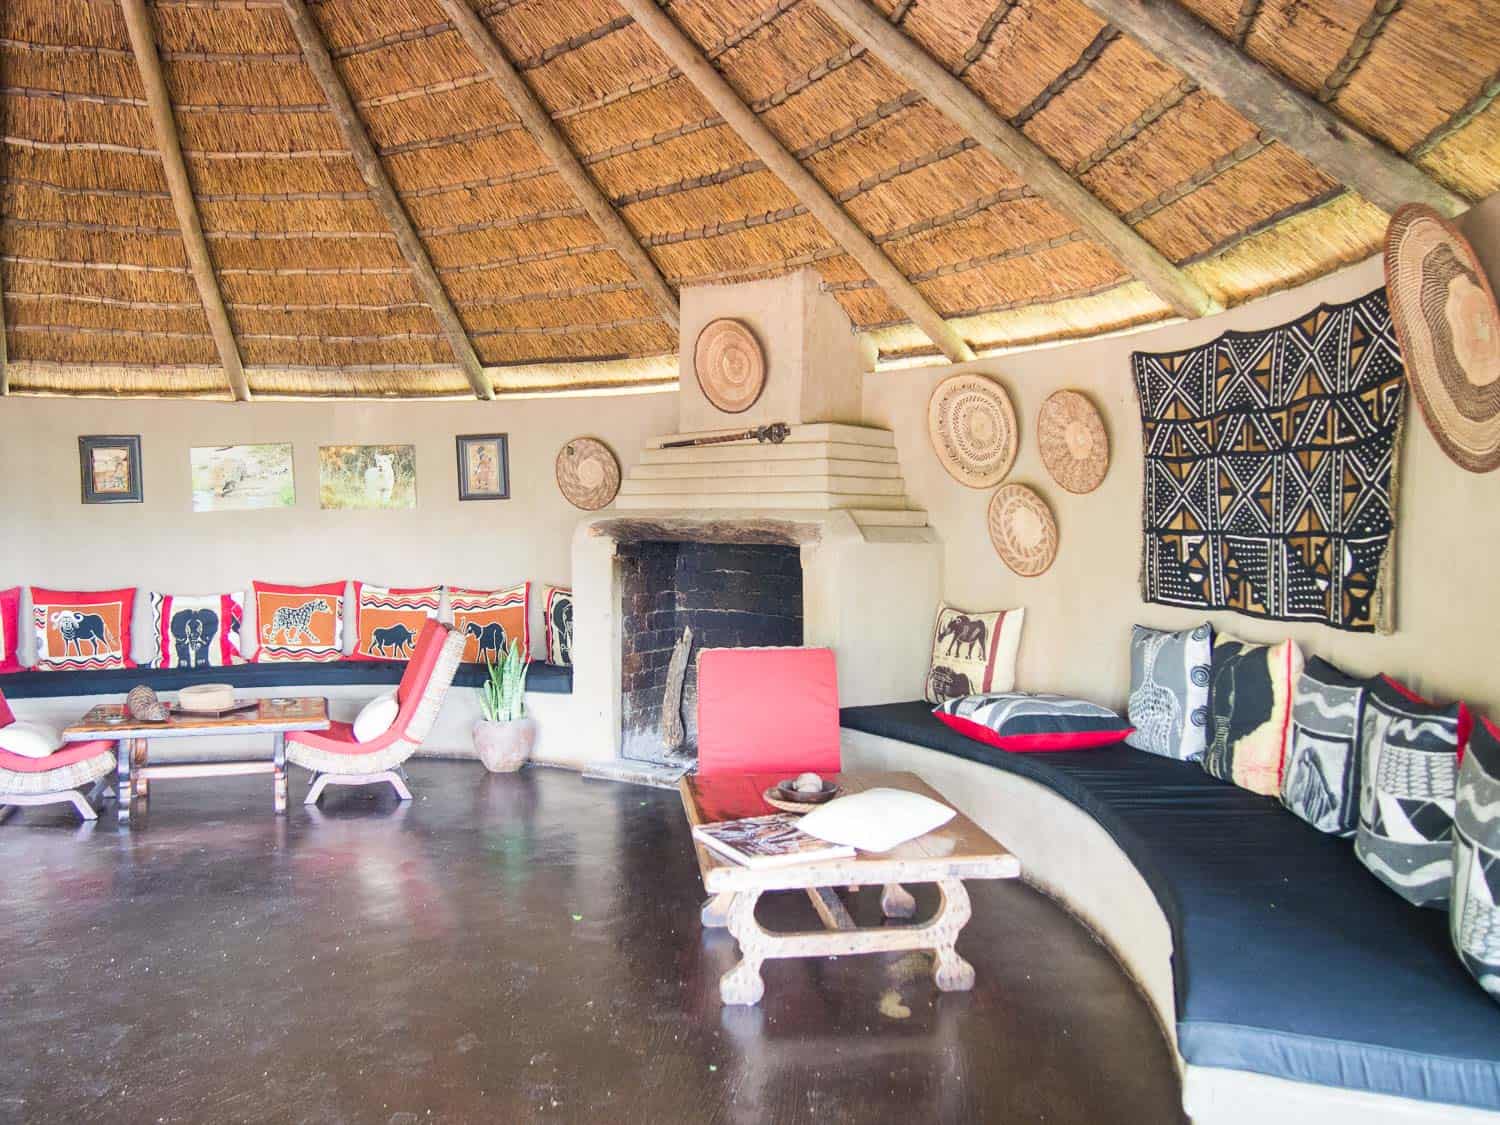 Umlani bushcamp review: the lounge